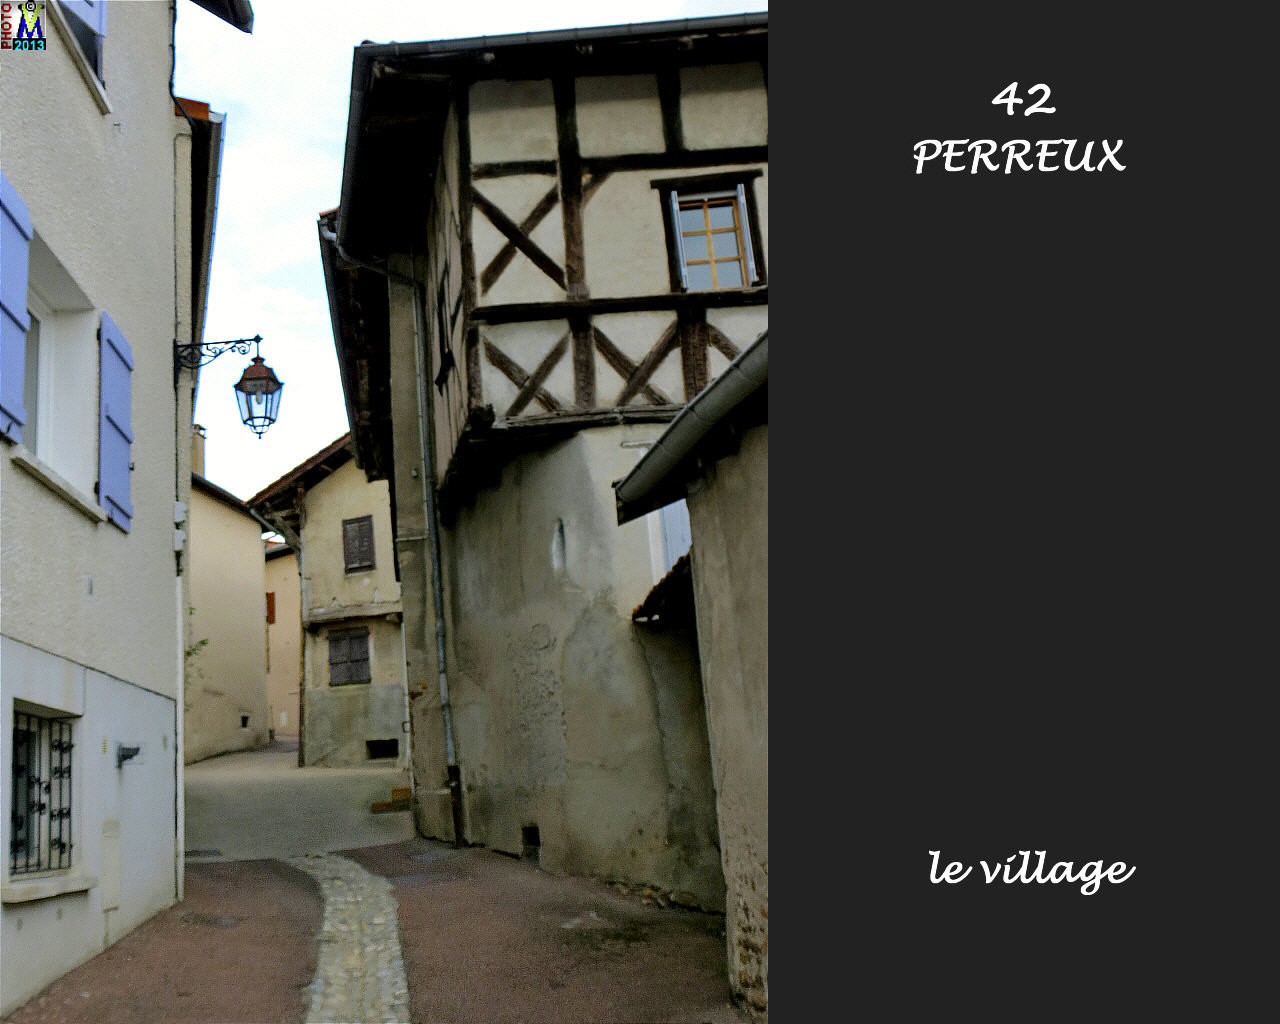 42PERREUX_village_120.jpg